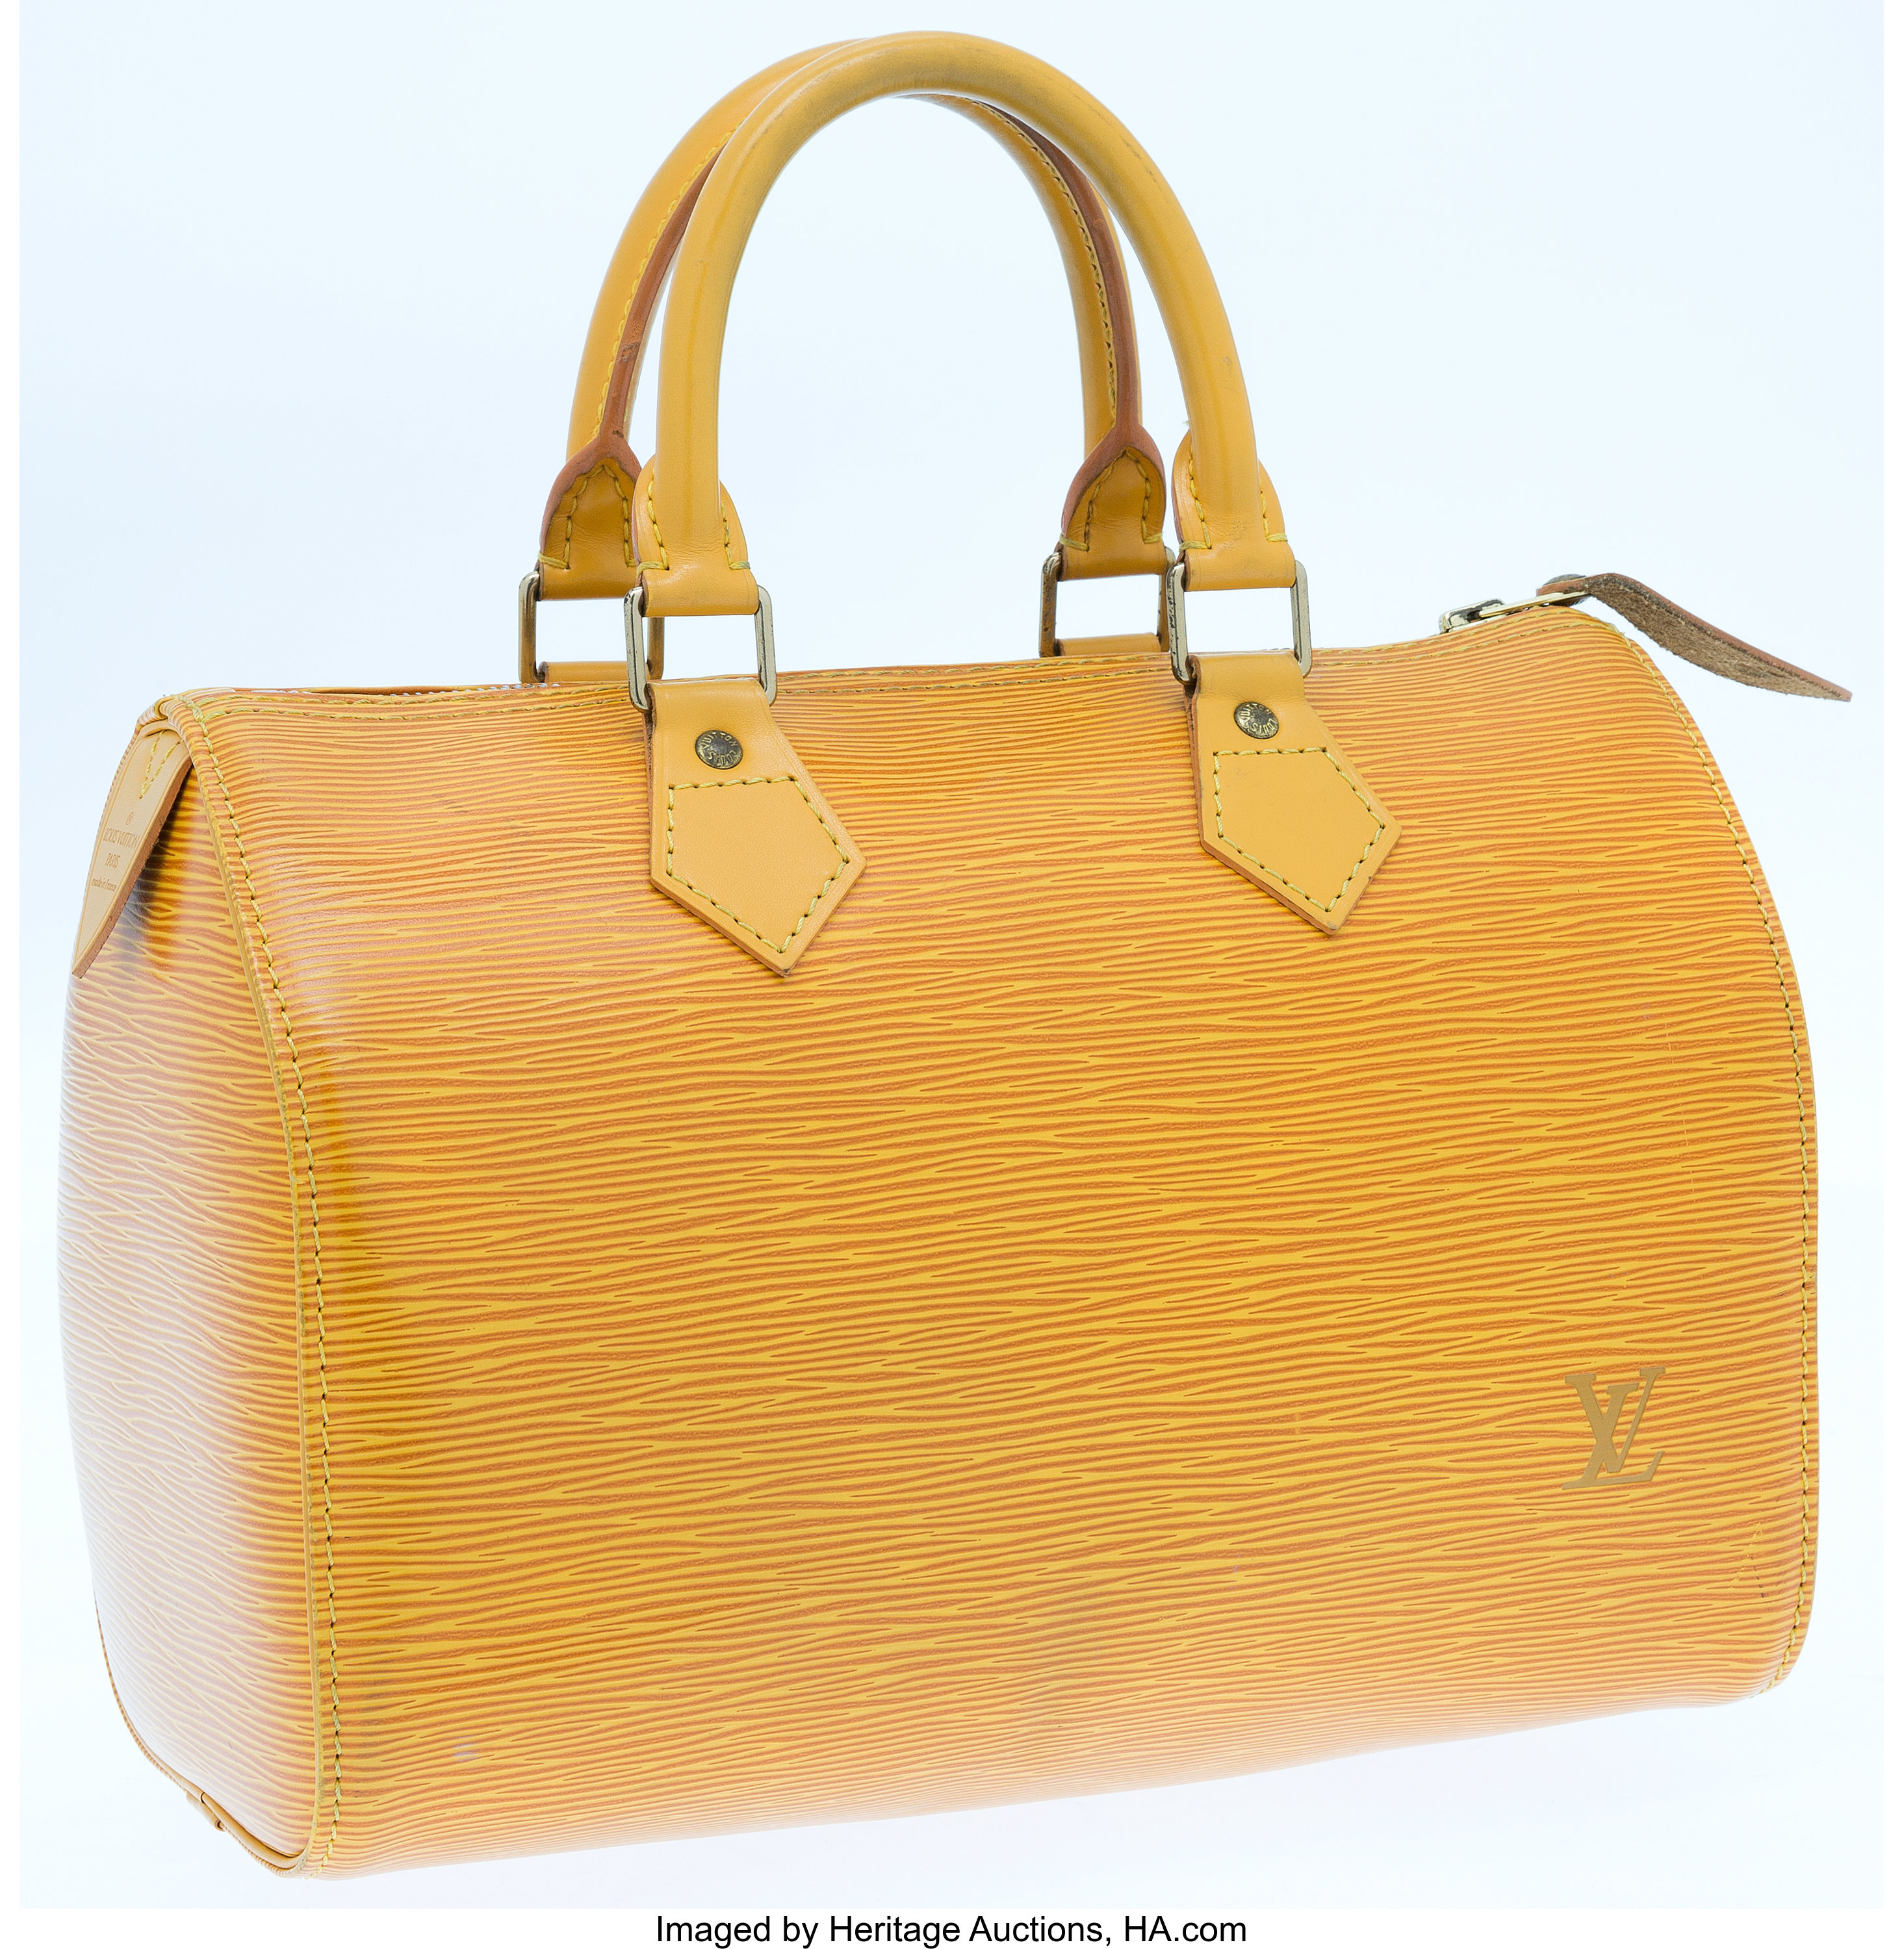 Louis Vuitton Epi Speedy 35 - Black Handle Bags, Handbags